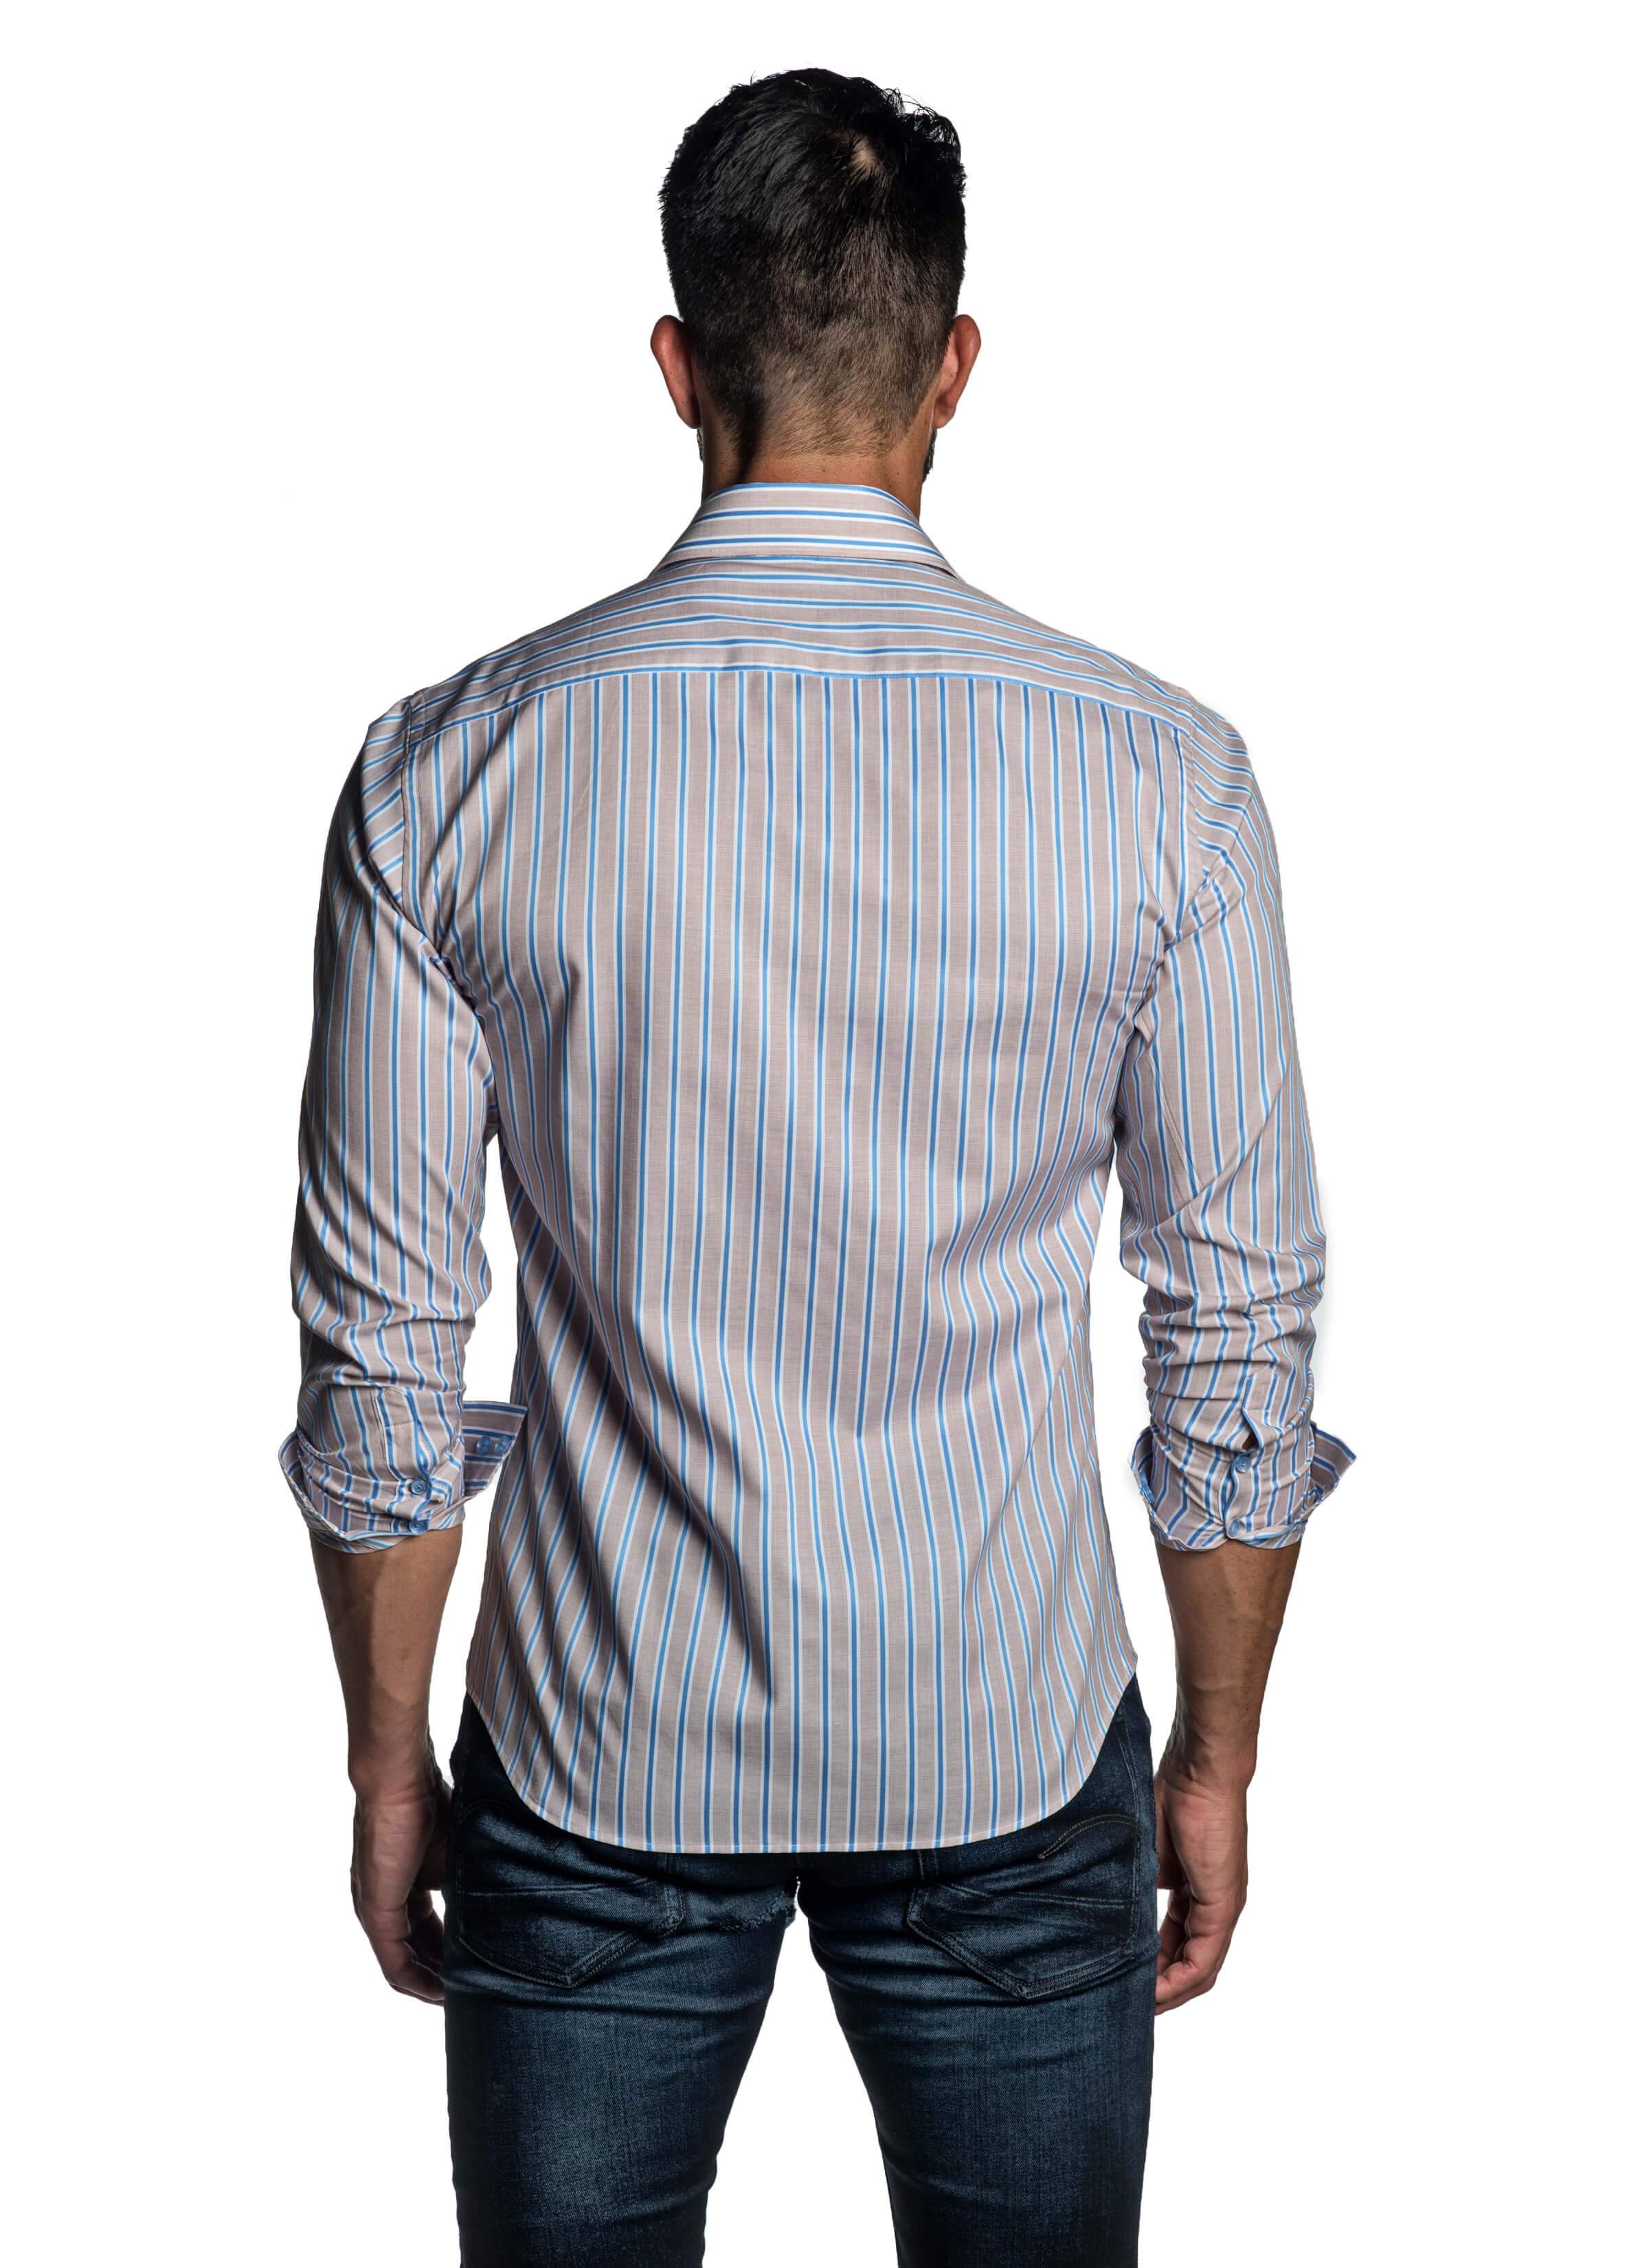 Beige and Light Blue Stripe Shirt for Men T-2613